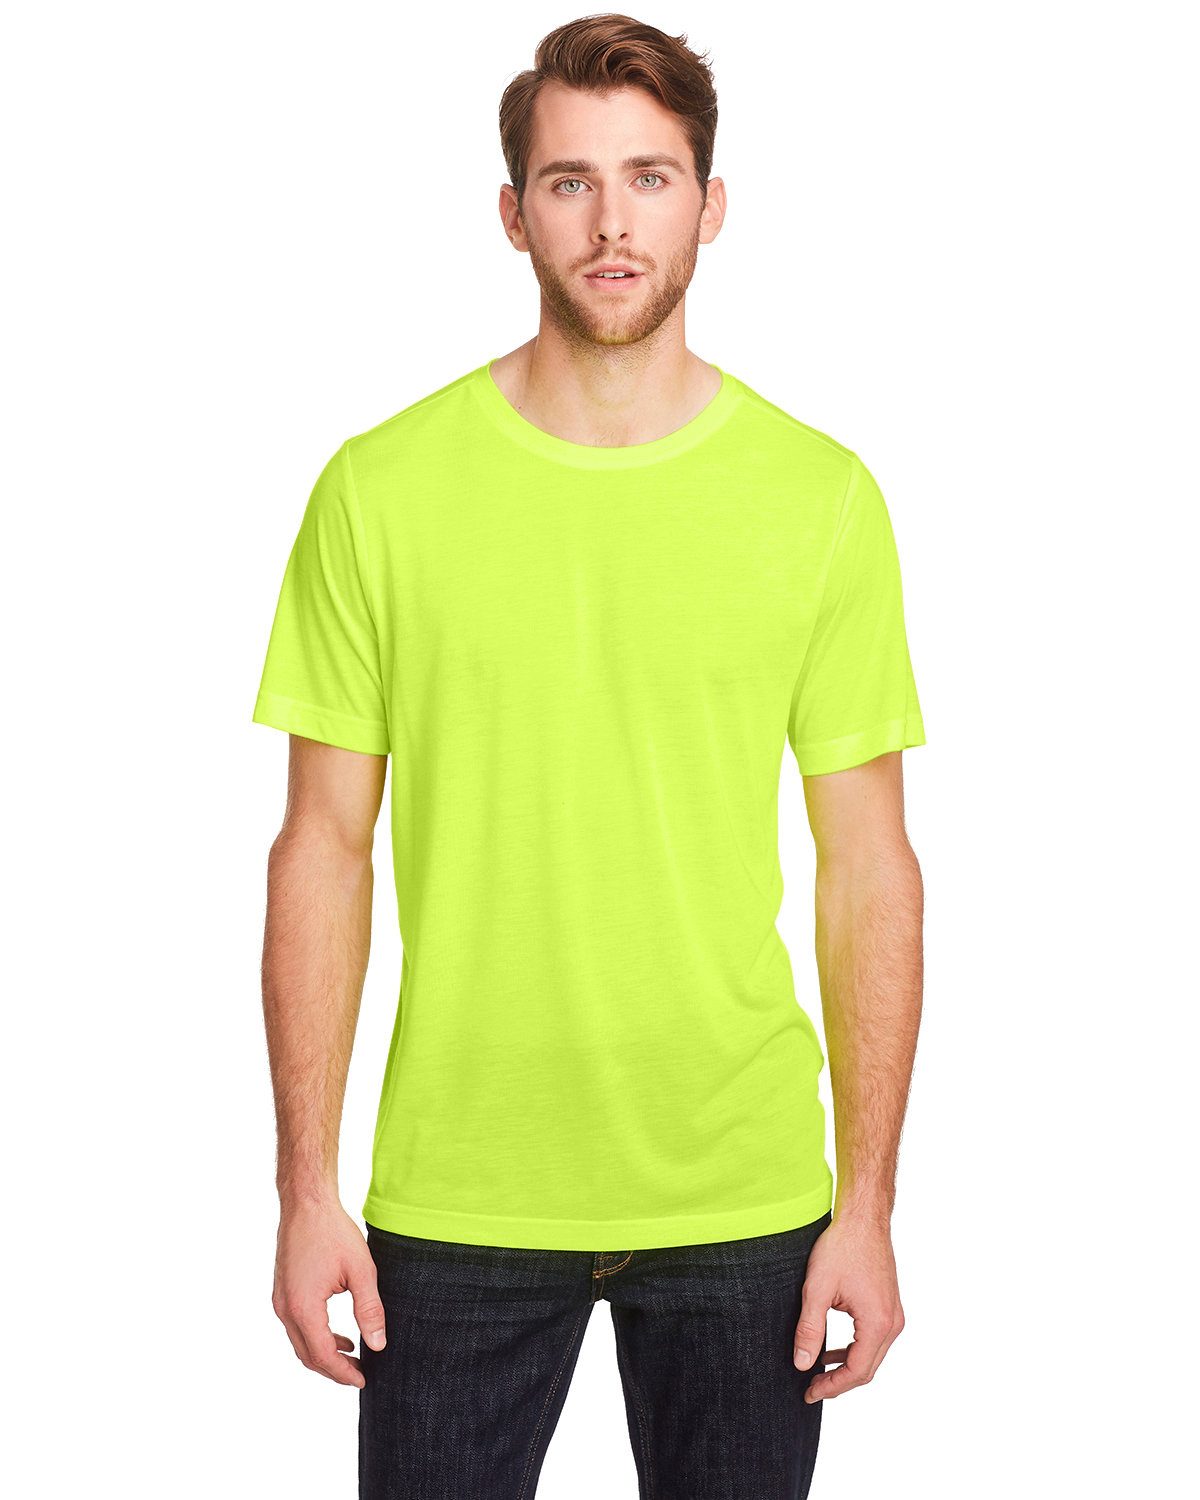 CORE365 Adult Fusion ChromaSoft Performance T-Shirt SAFETY YELLOW 